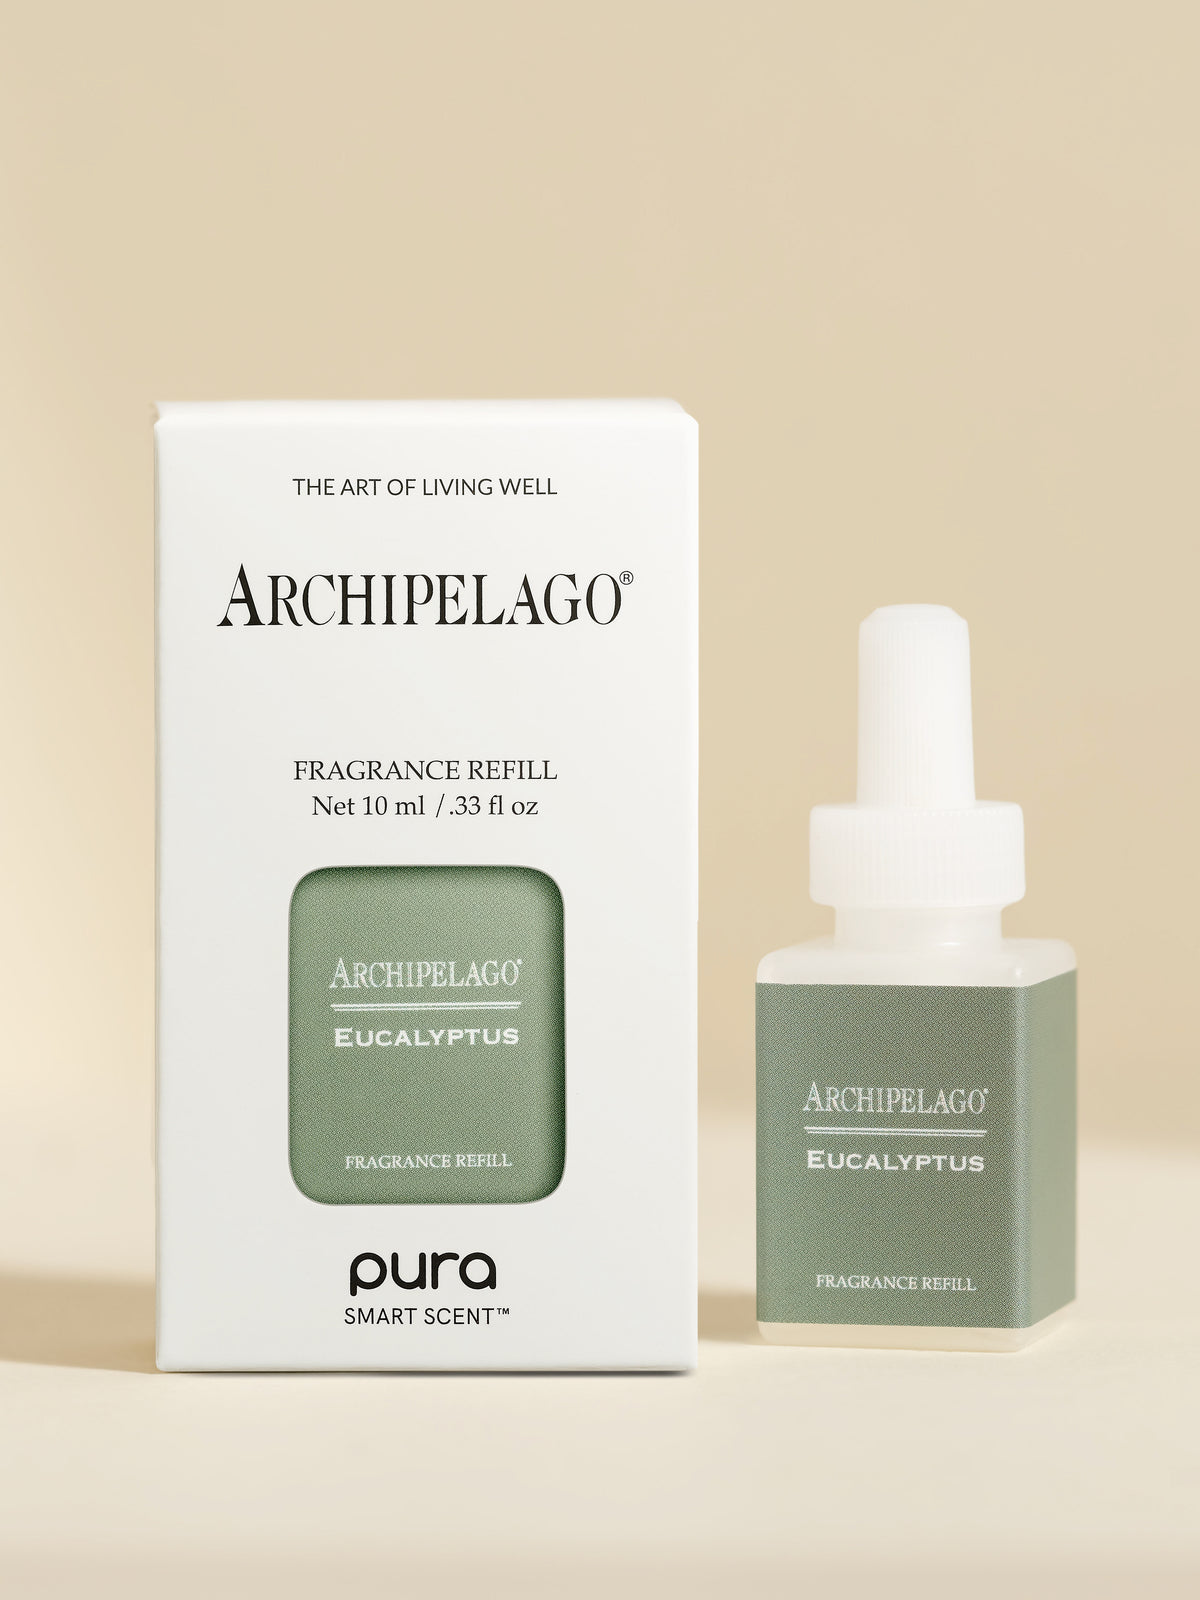 Eucalyptus Pura Smart Vial Fragrance Refill by Archipelago